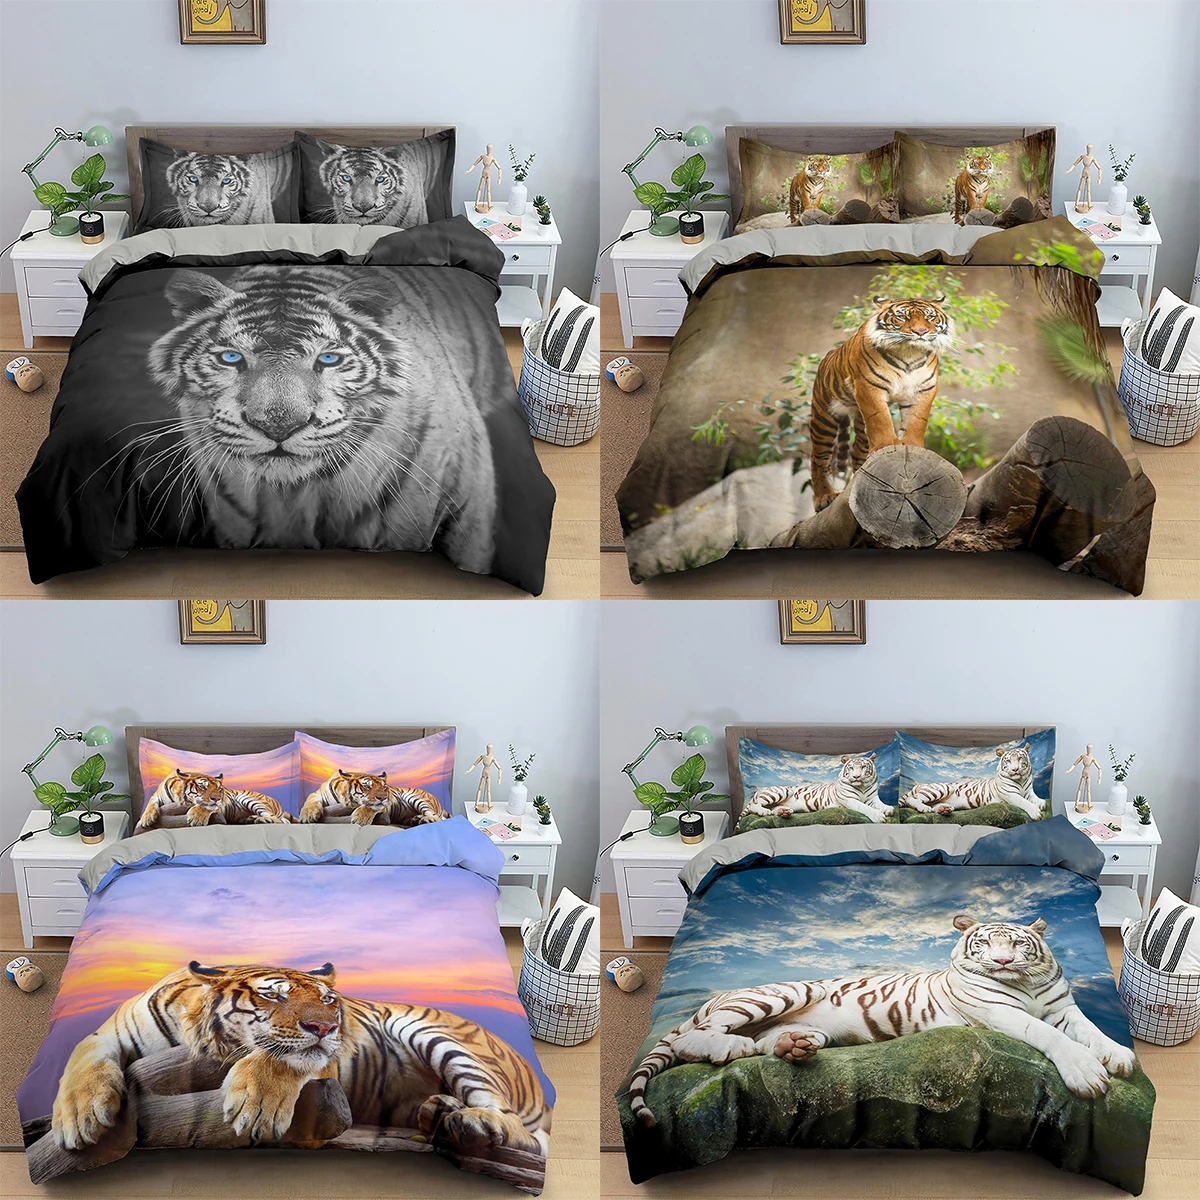 

3D Tiger Bedding Set Home Textiles Animals Tiger Duvet Cover Comforter Cover Microfiber Bedclothes Bedroom Decor Bedspread